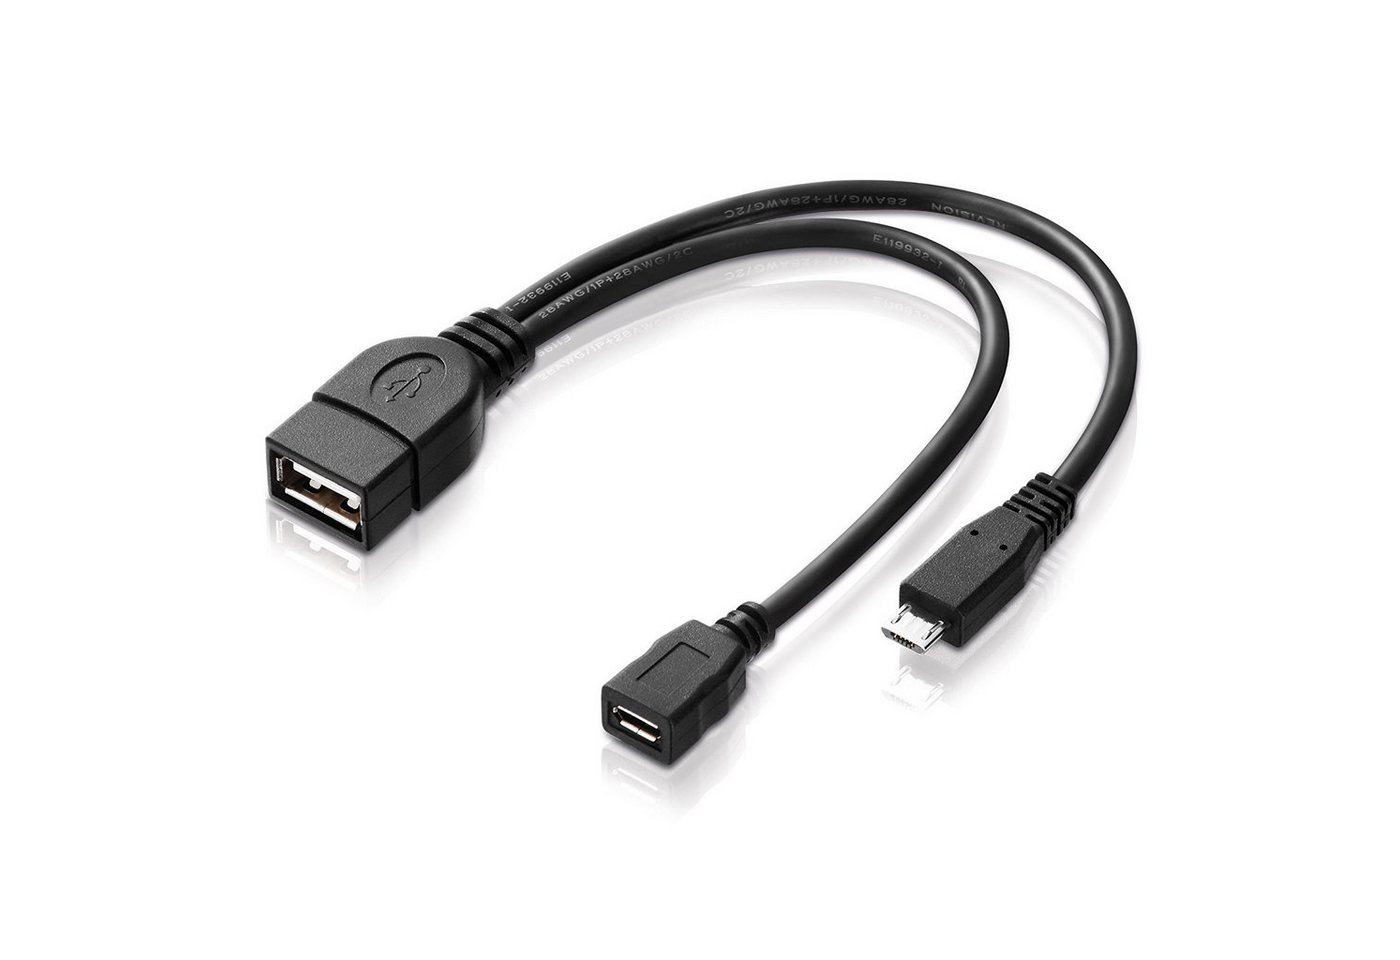 adaptare adaptare 40228 USB-OTG Adapter-Kabel Micro-USB 2.0-Stecker USB-Buchse USB-Kabel von adaptare